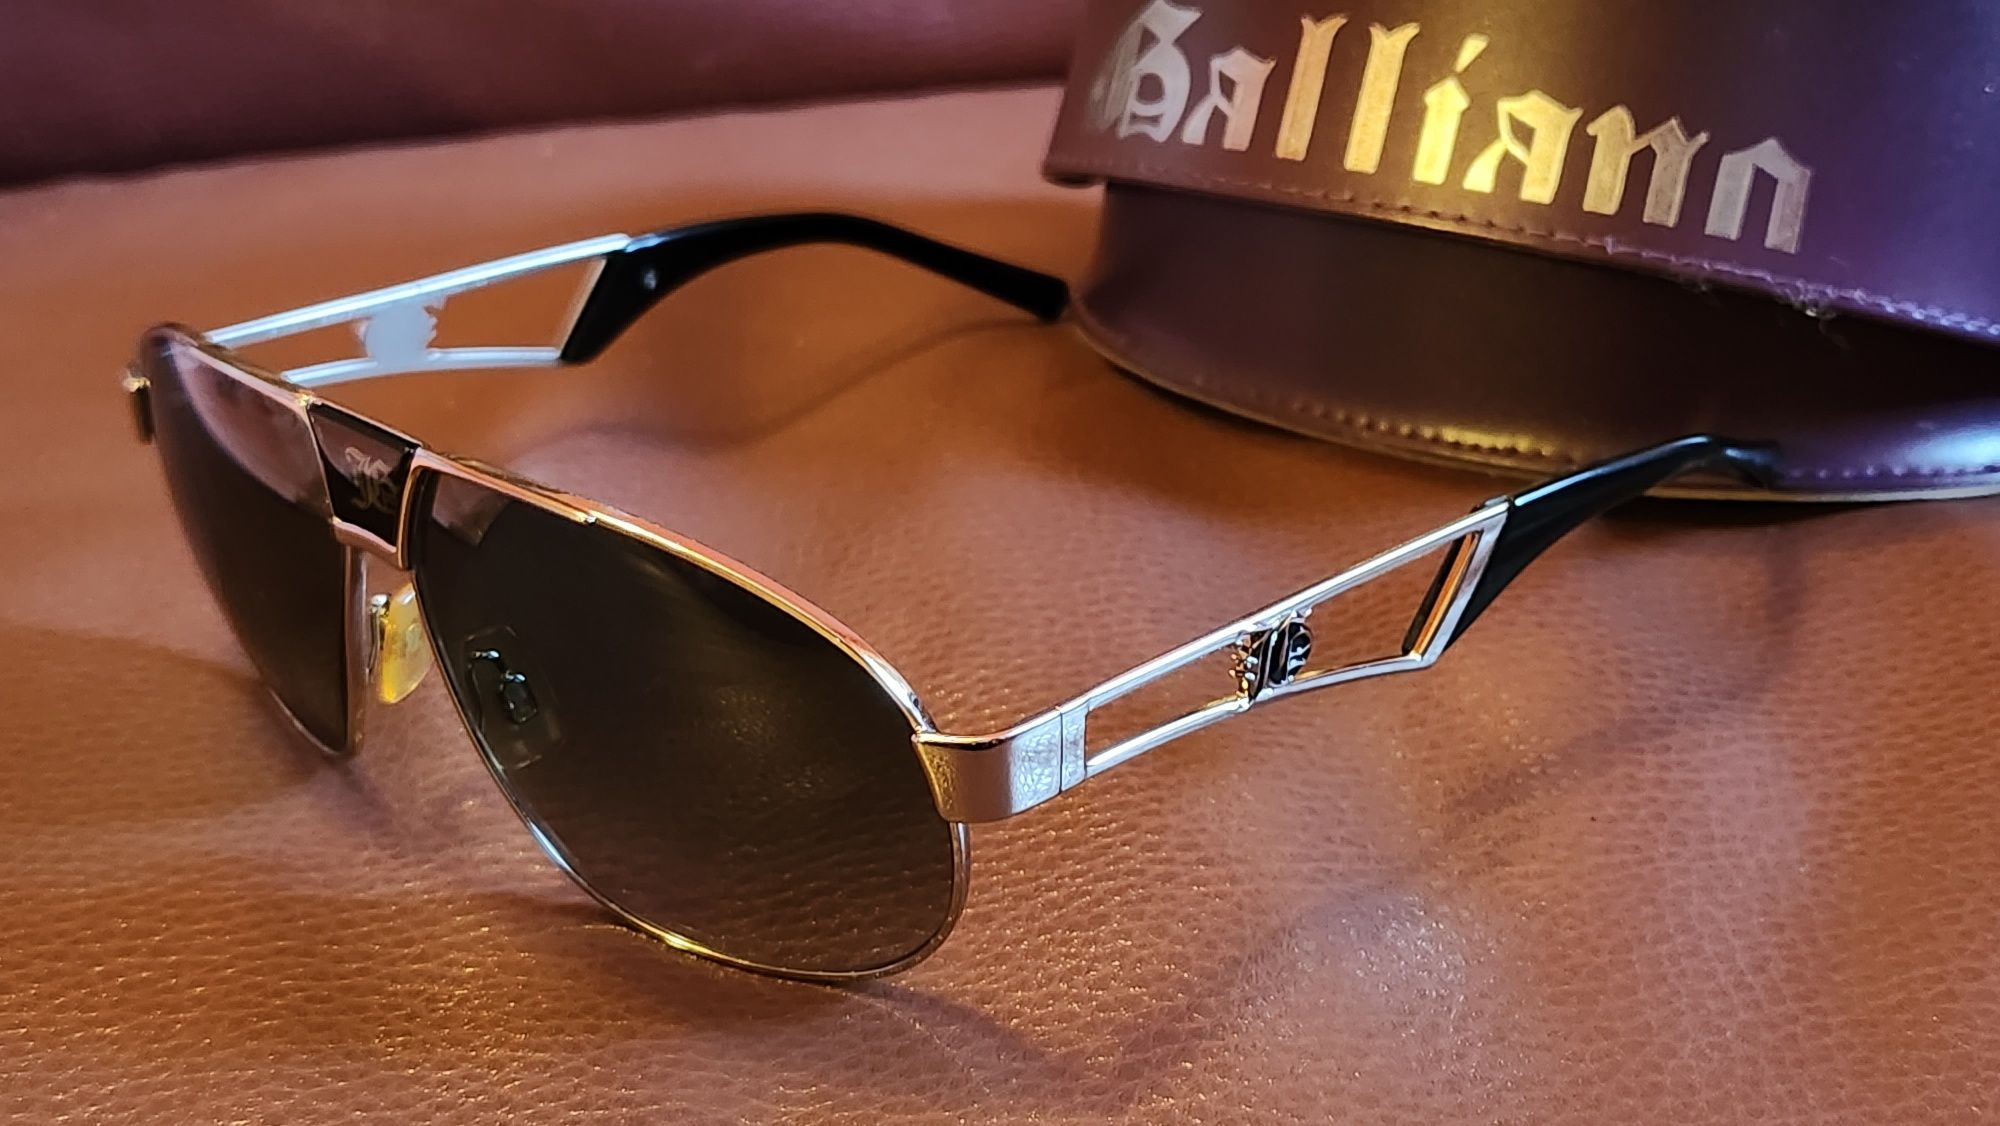 Ochelari de soare originali John Galliano (Made în Italy)